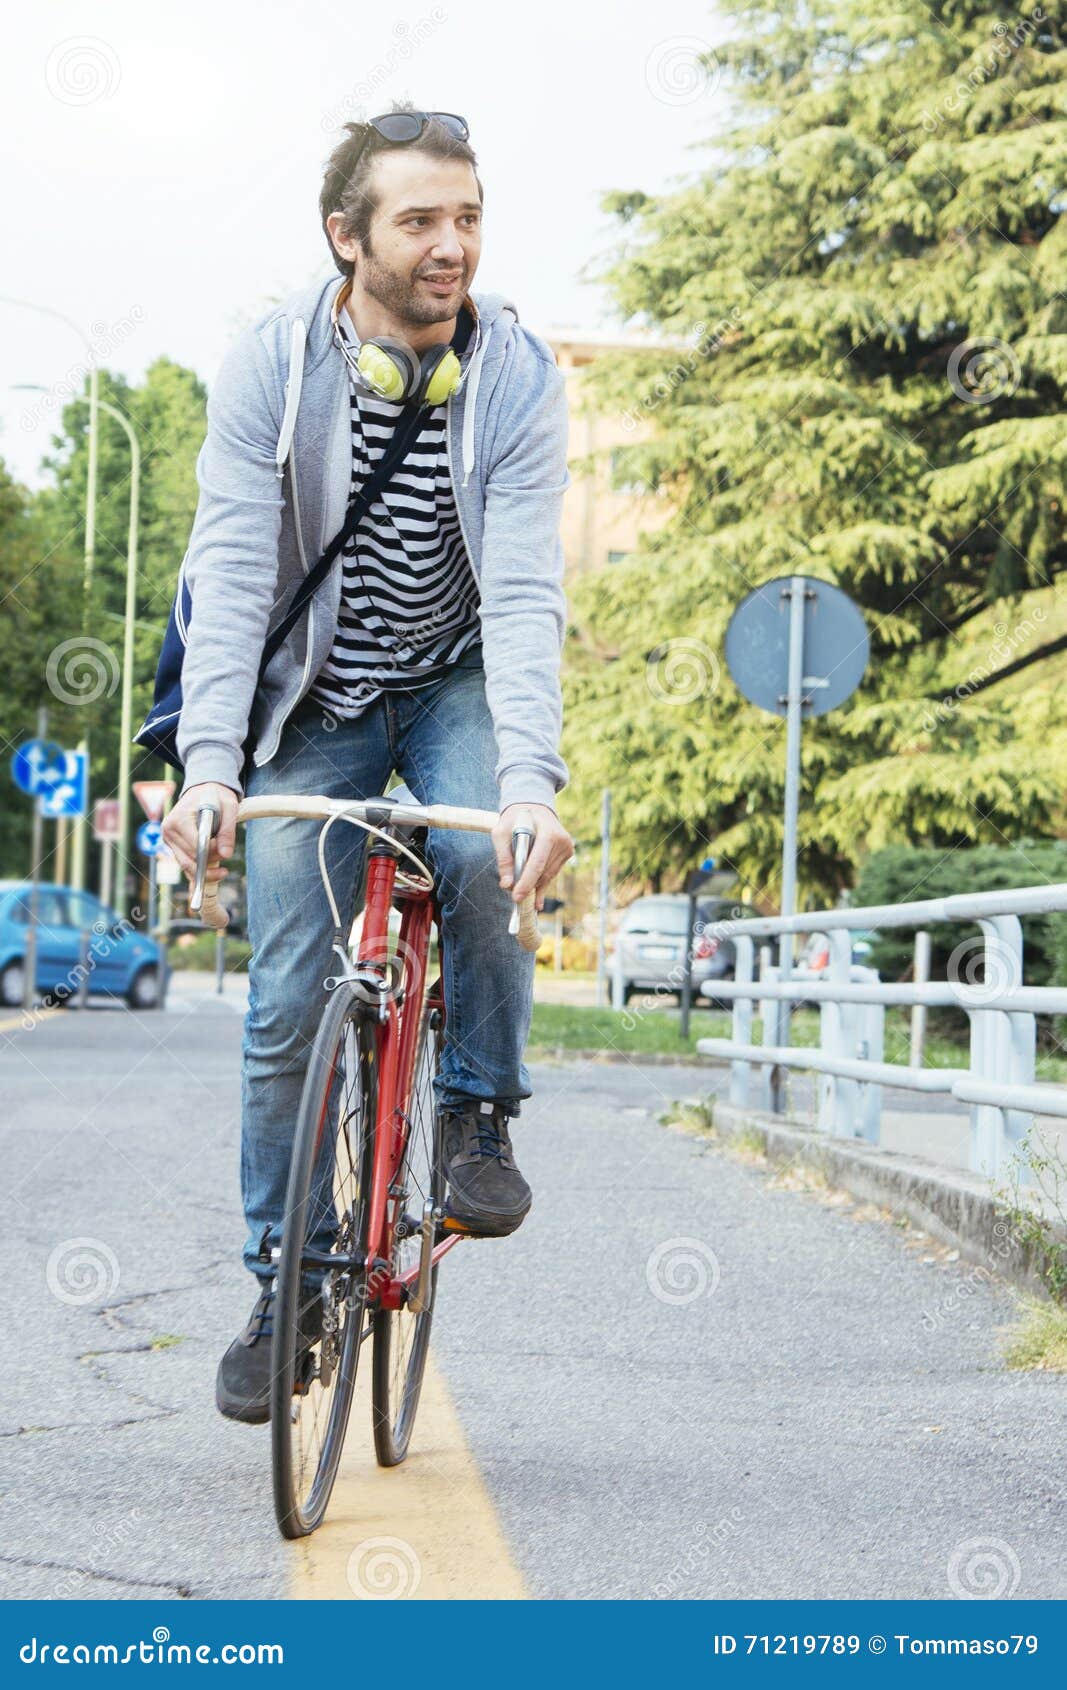 young adult bike